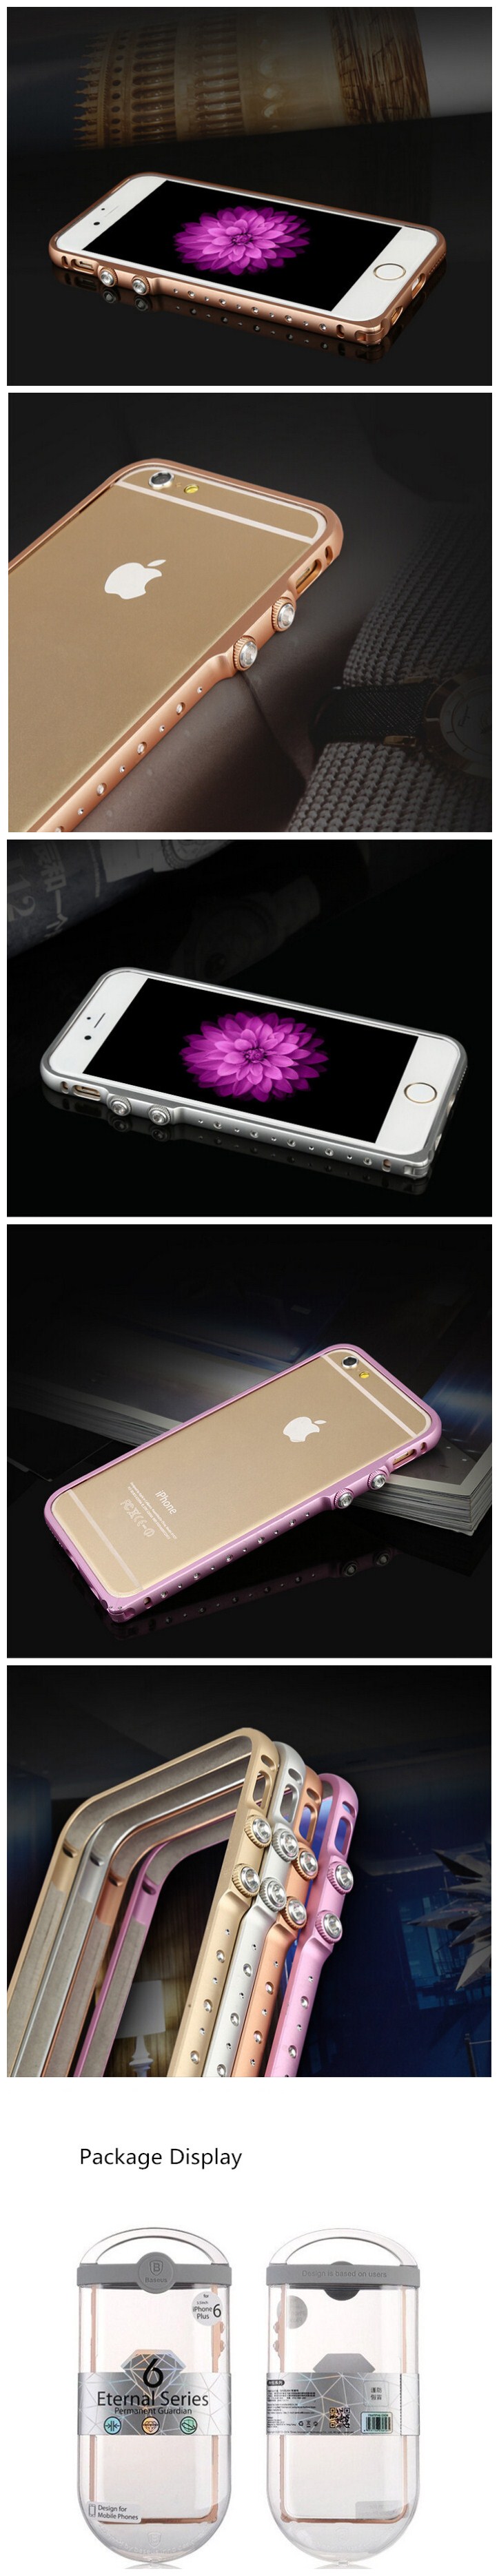 BASEUS Diamond Crystal Rhinestone Bling Aluminum Metal Frame Bumper Case For Apple iPhone 6 6 Plus